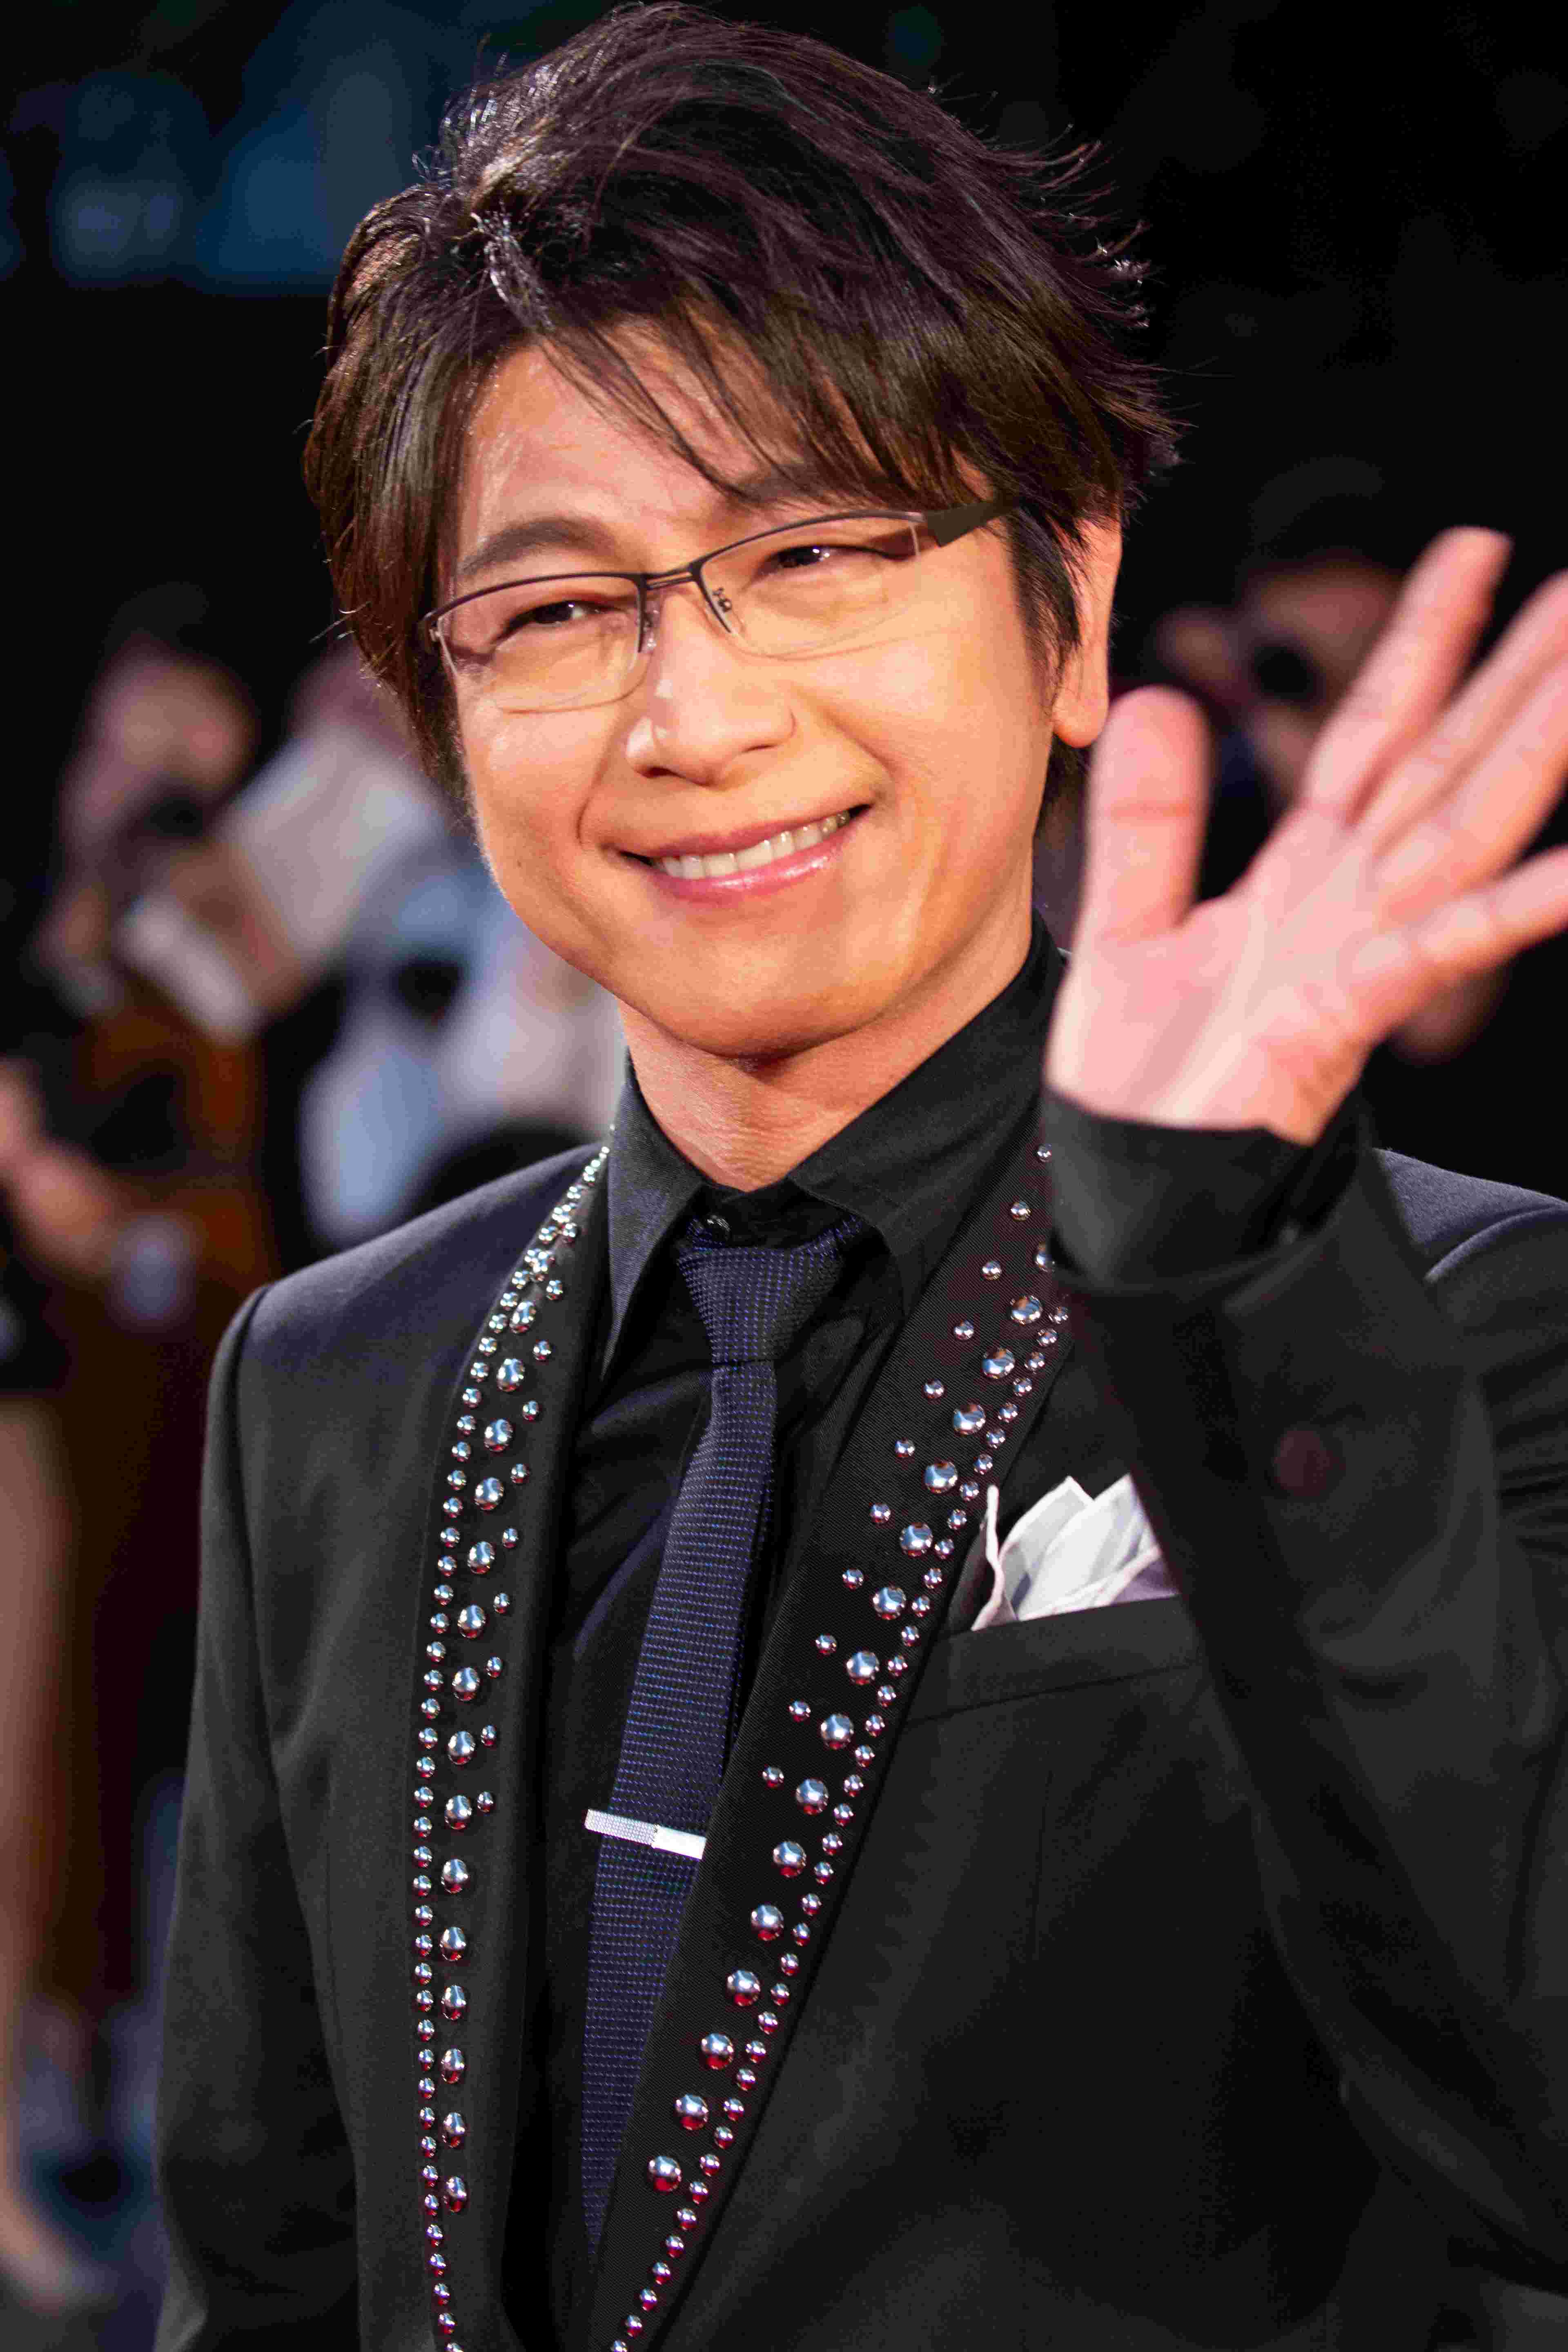 Mitsuhiro Oikawa